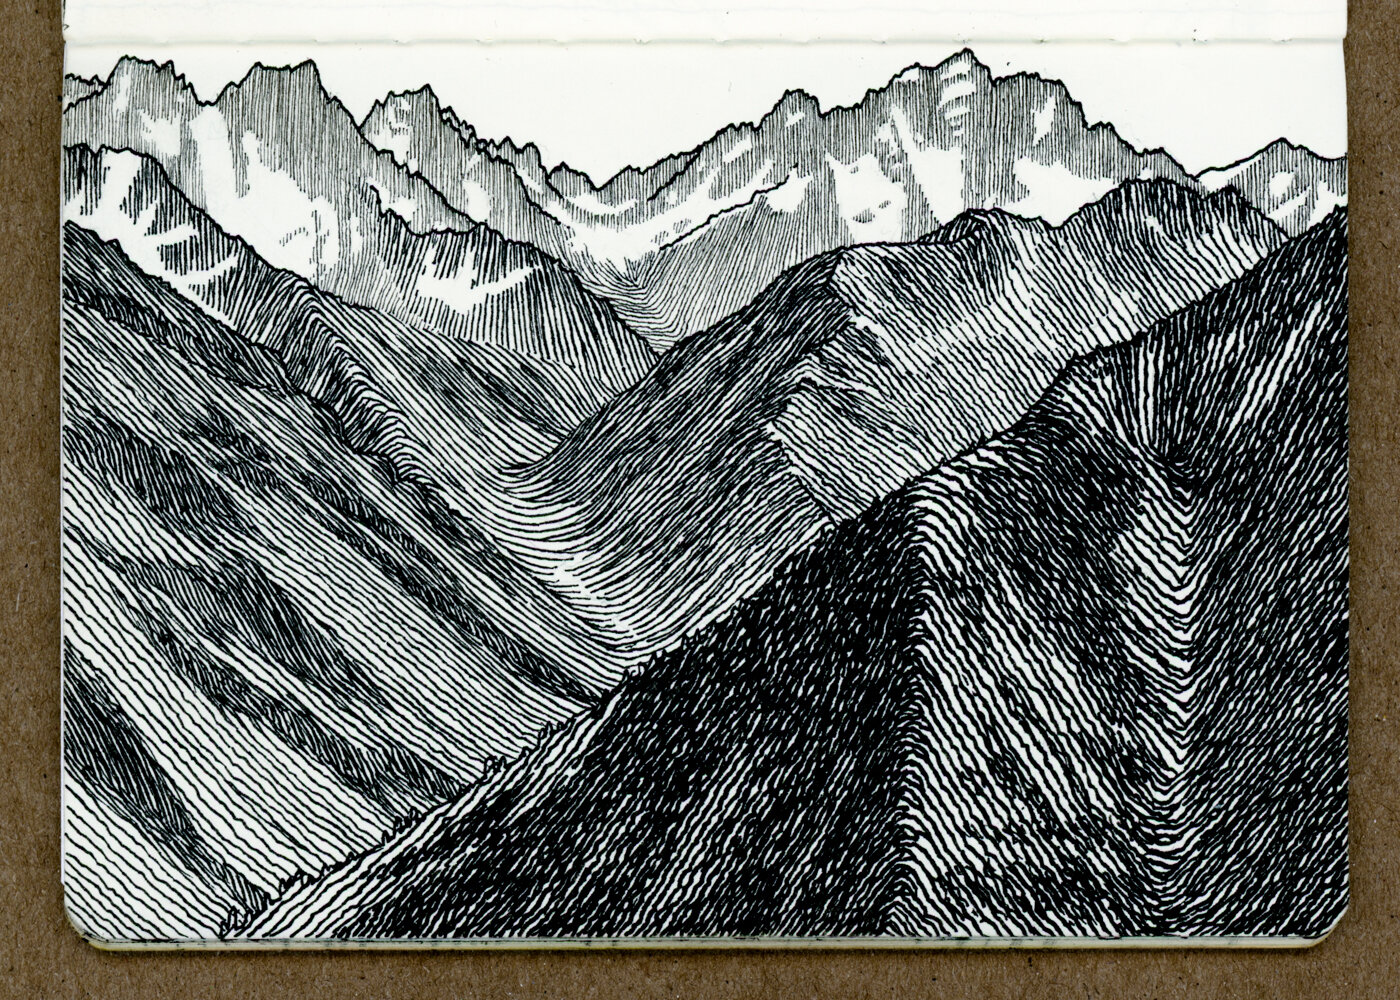 06-17 Eightmile Valley Below Stuart, Sherpa from Icicle Ridge.jpg